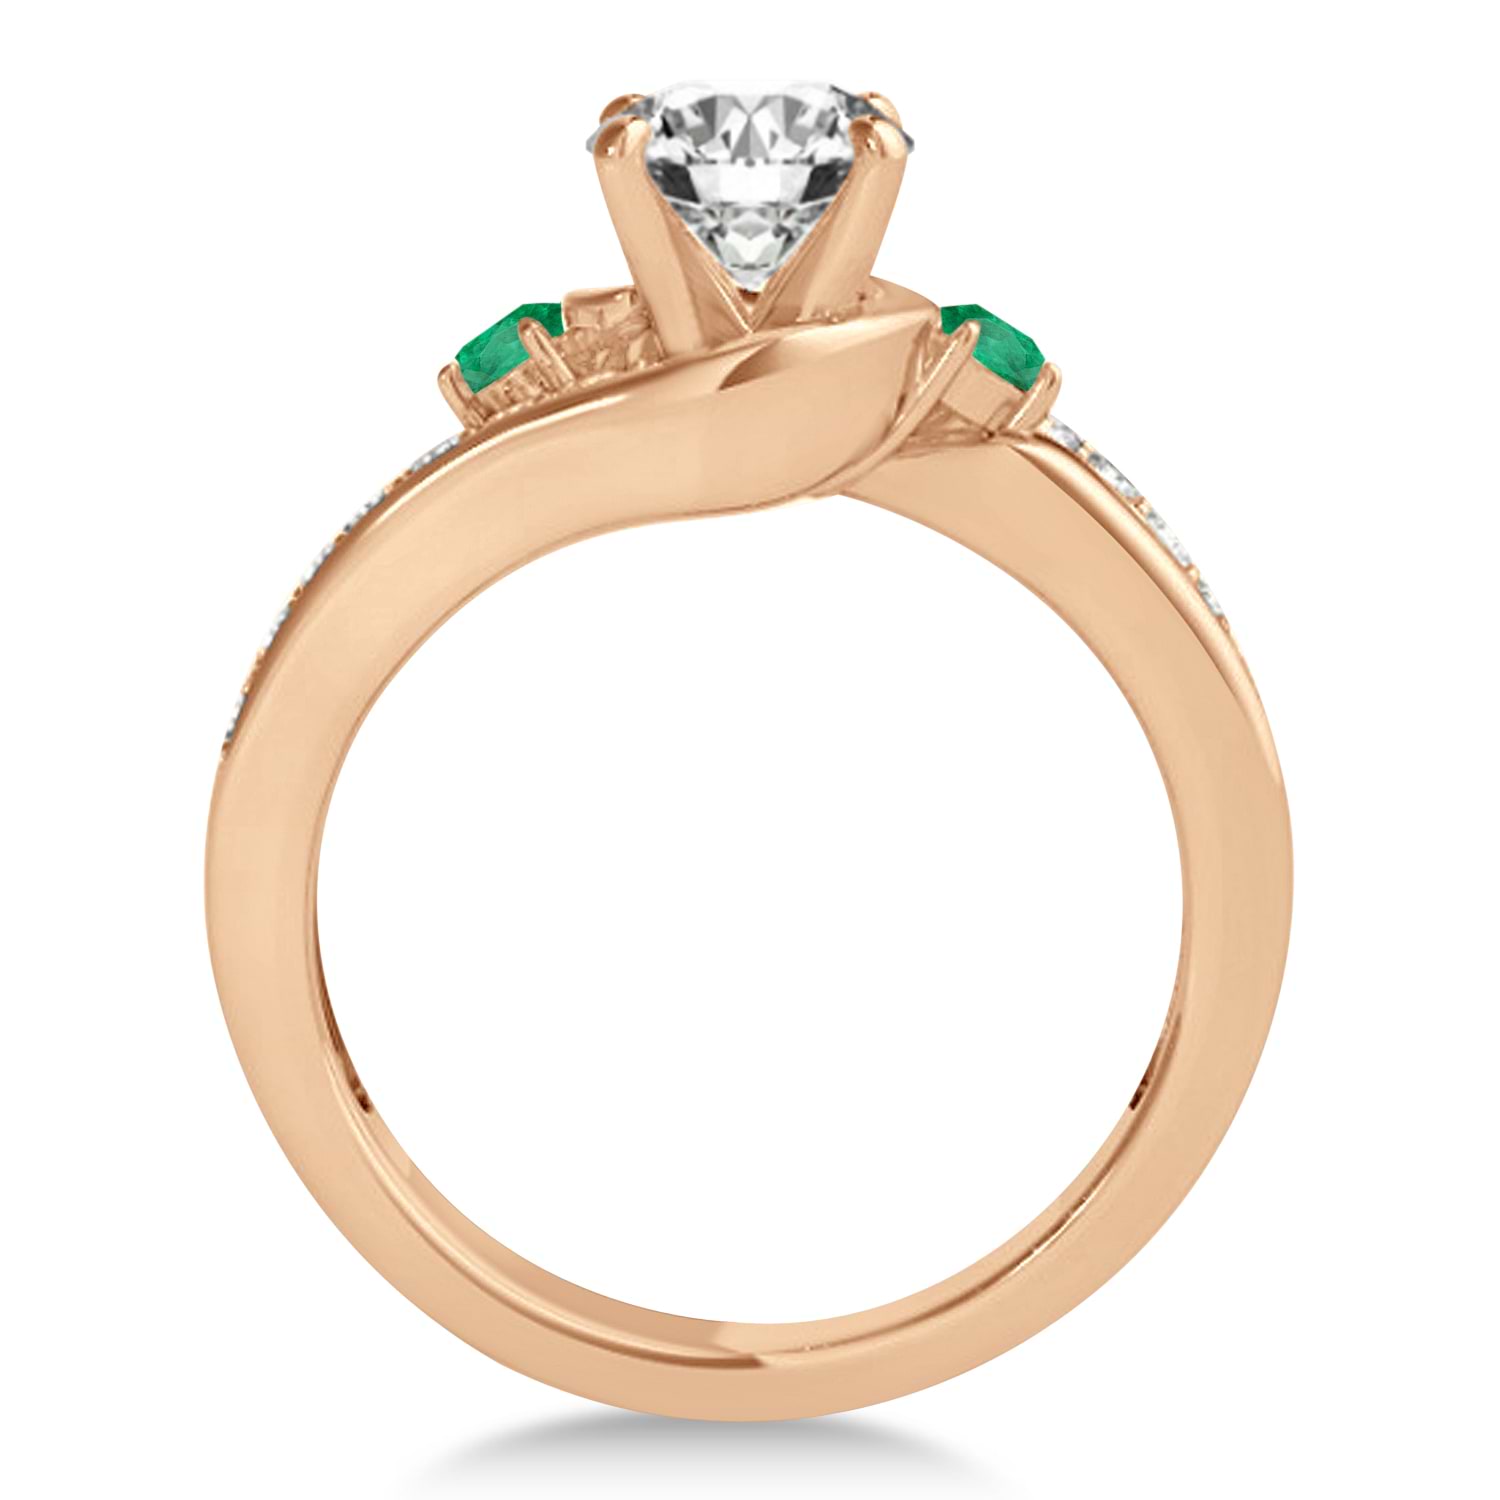 Swirl Design Emerald & Diamond Engagement Ring Setting 18k Rose Gold 0.38ct